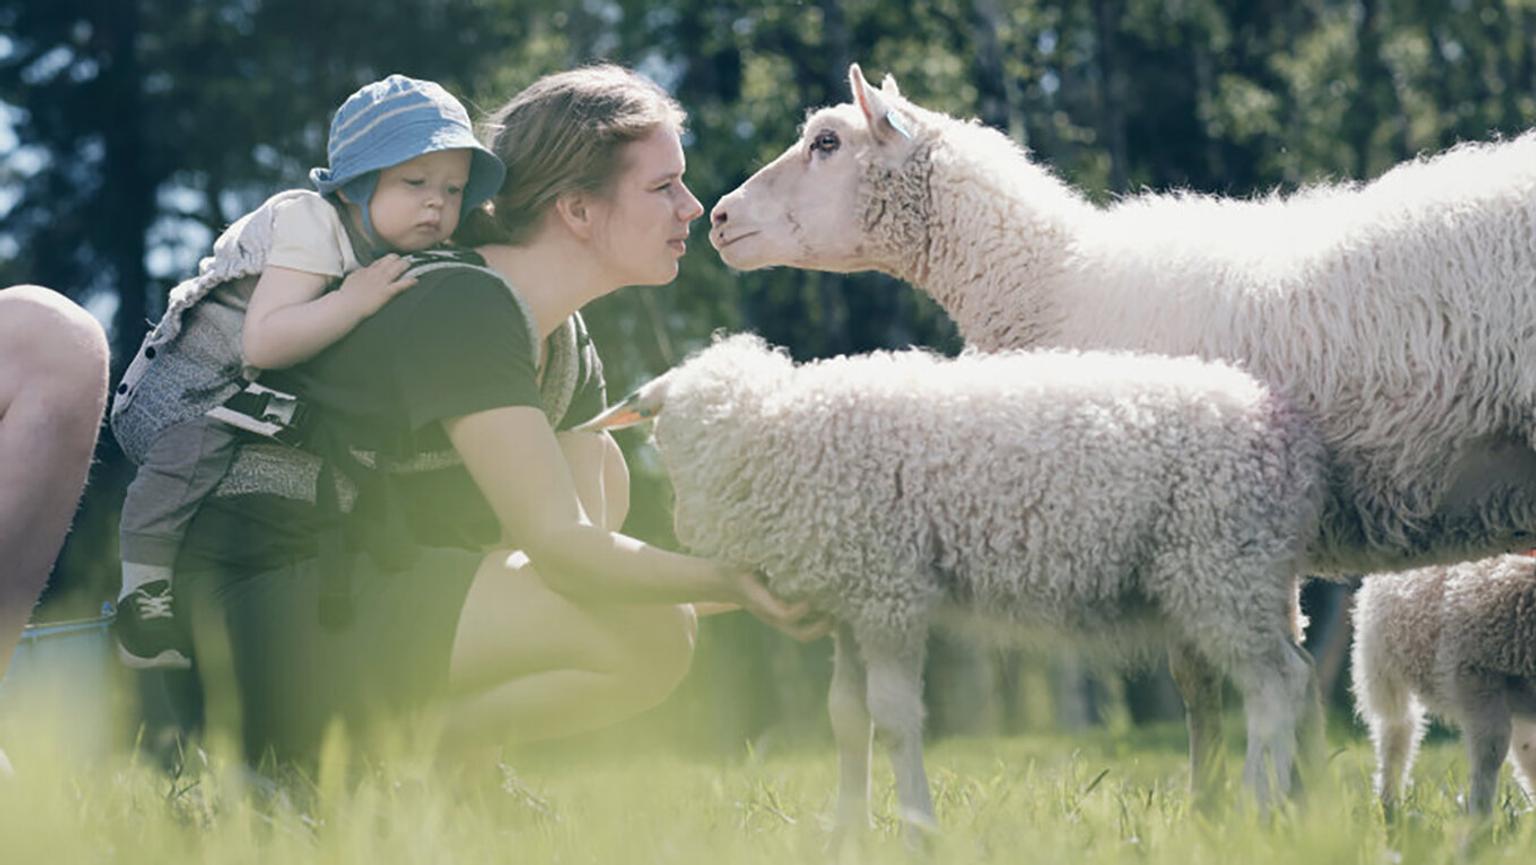 Woman and child petting sheep